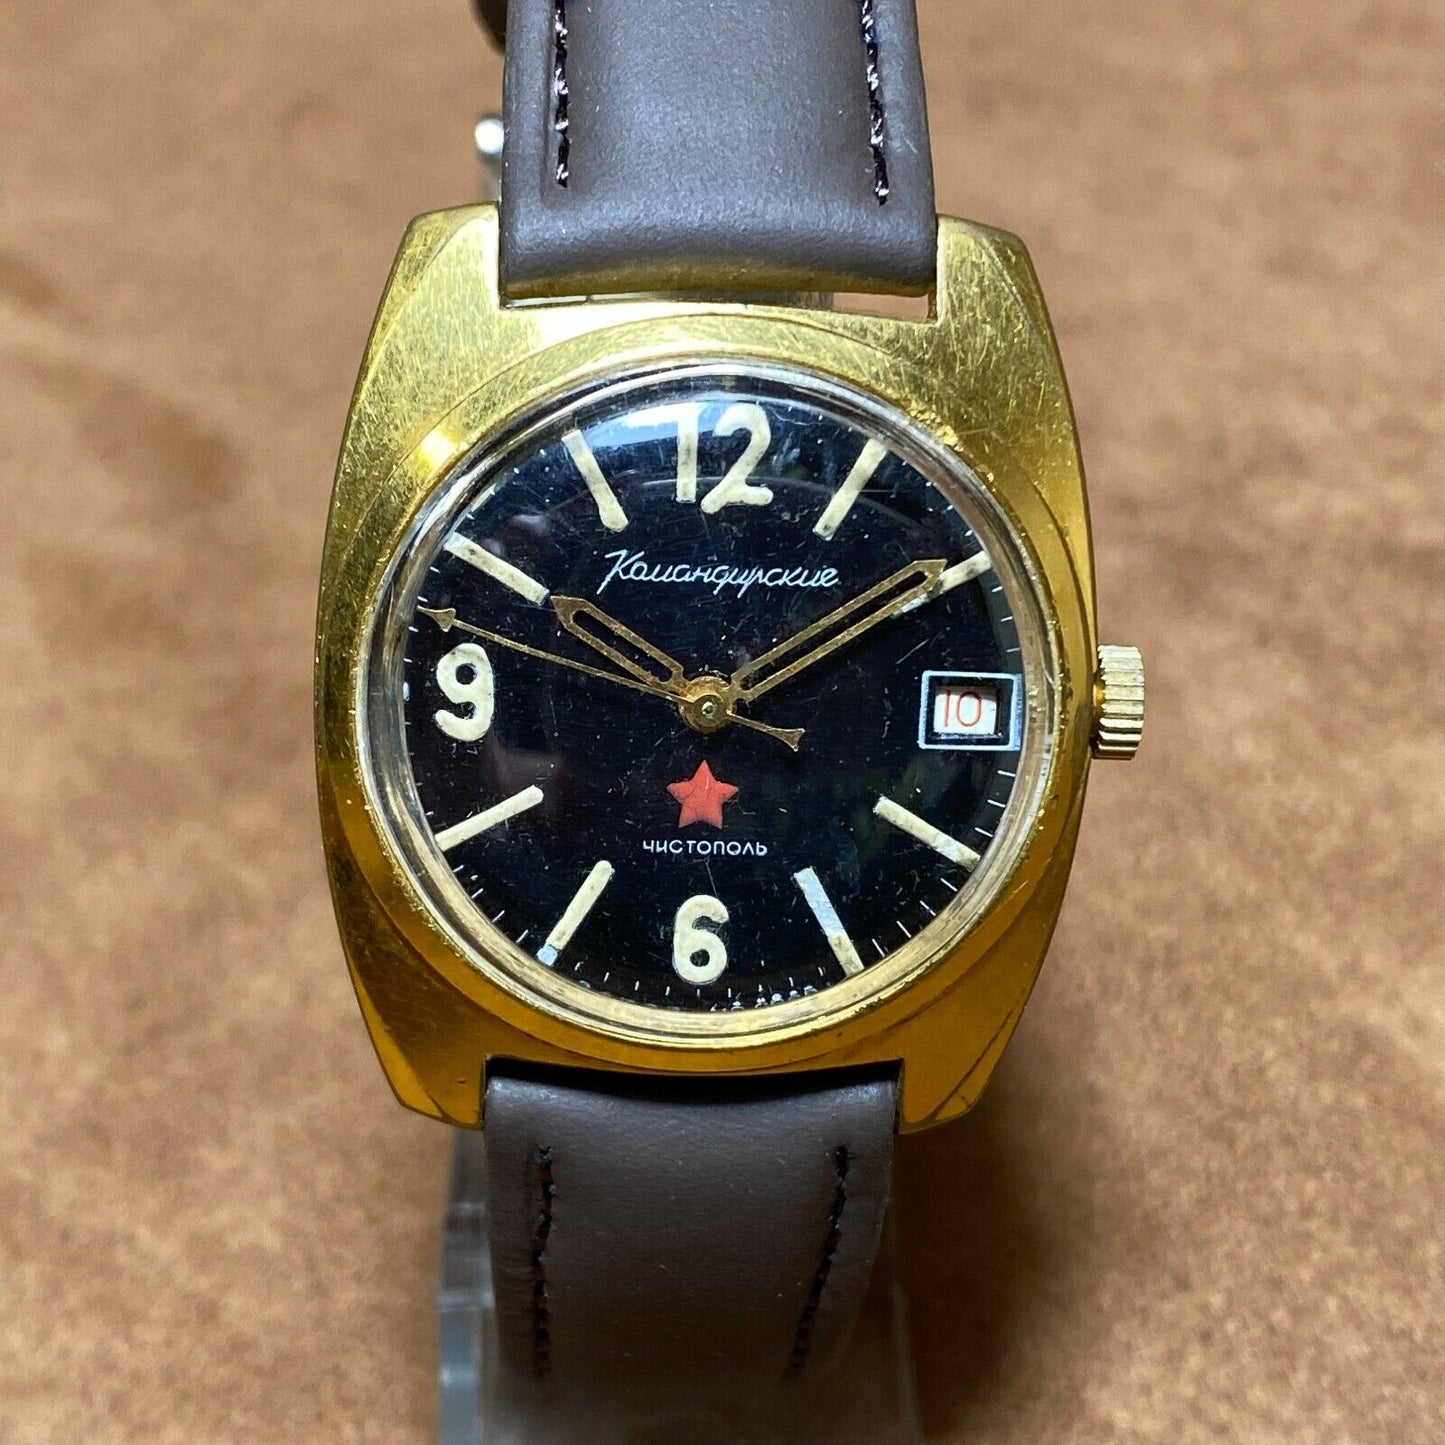 Soviet Watch VOSTOK Komandirskie Chistopol Watch Mechanical Military Stop-Second